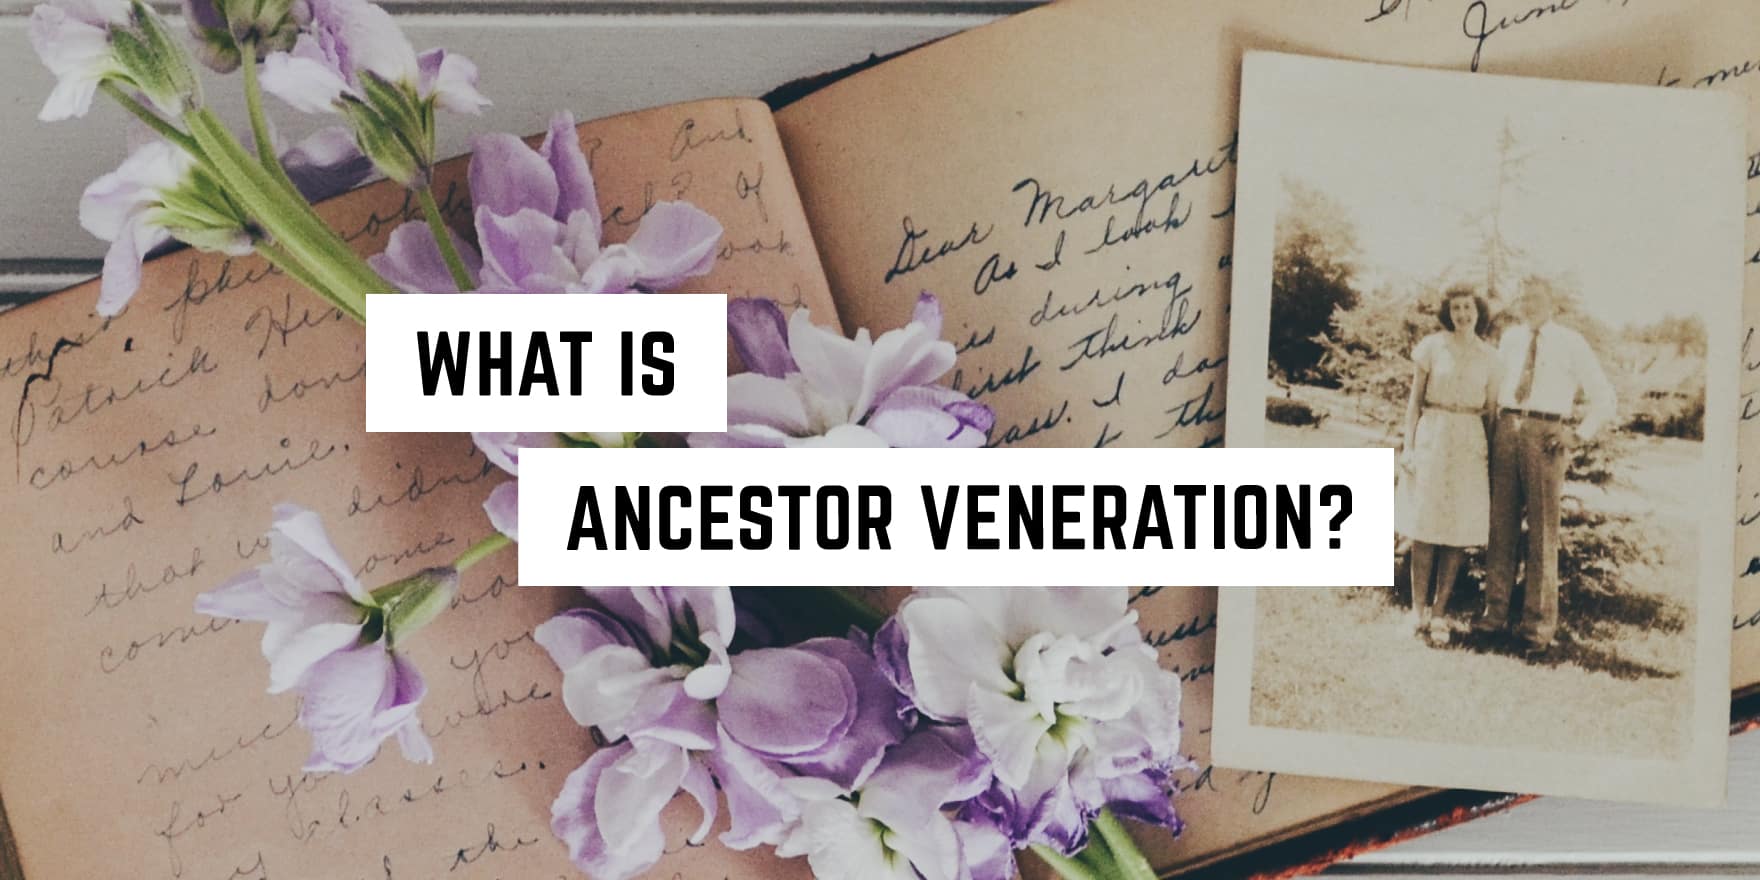 What is Ancestor Veneration?